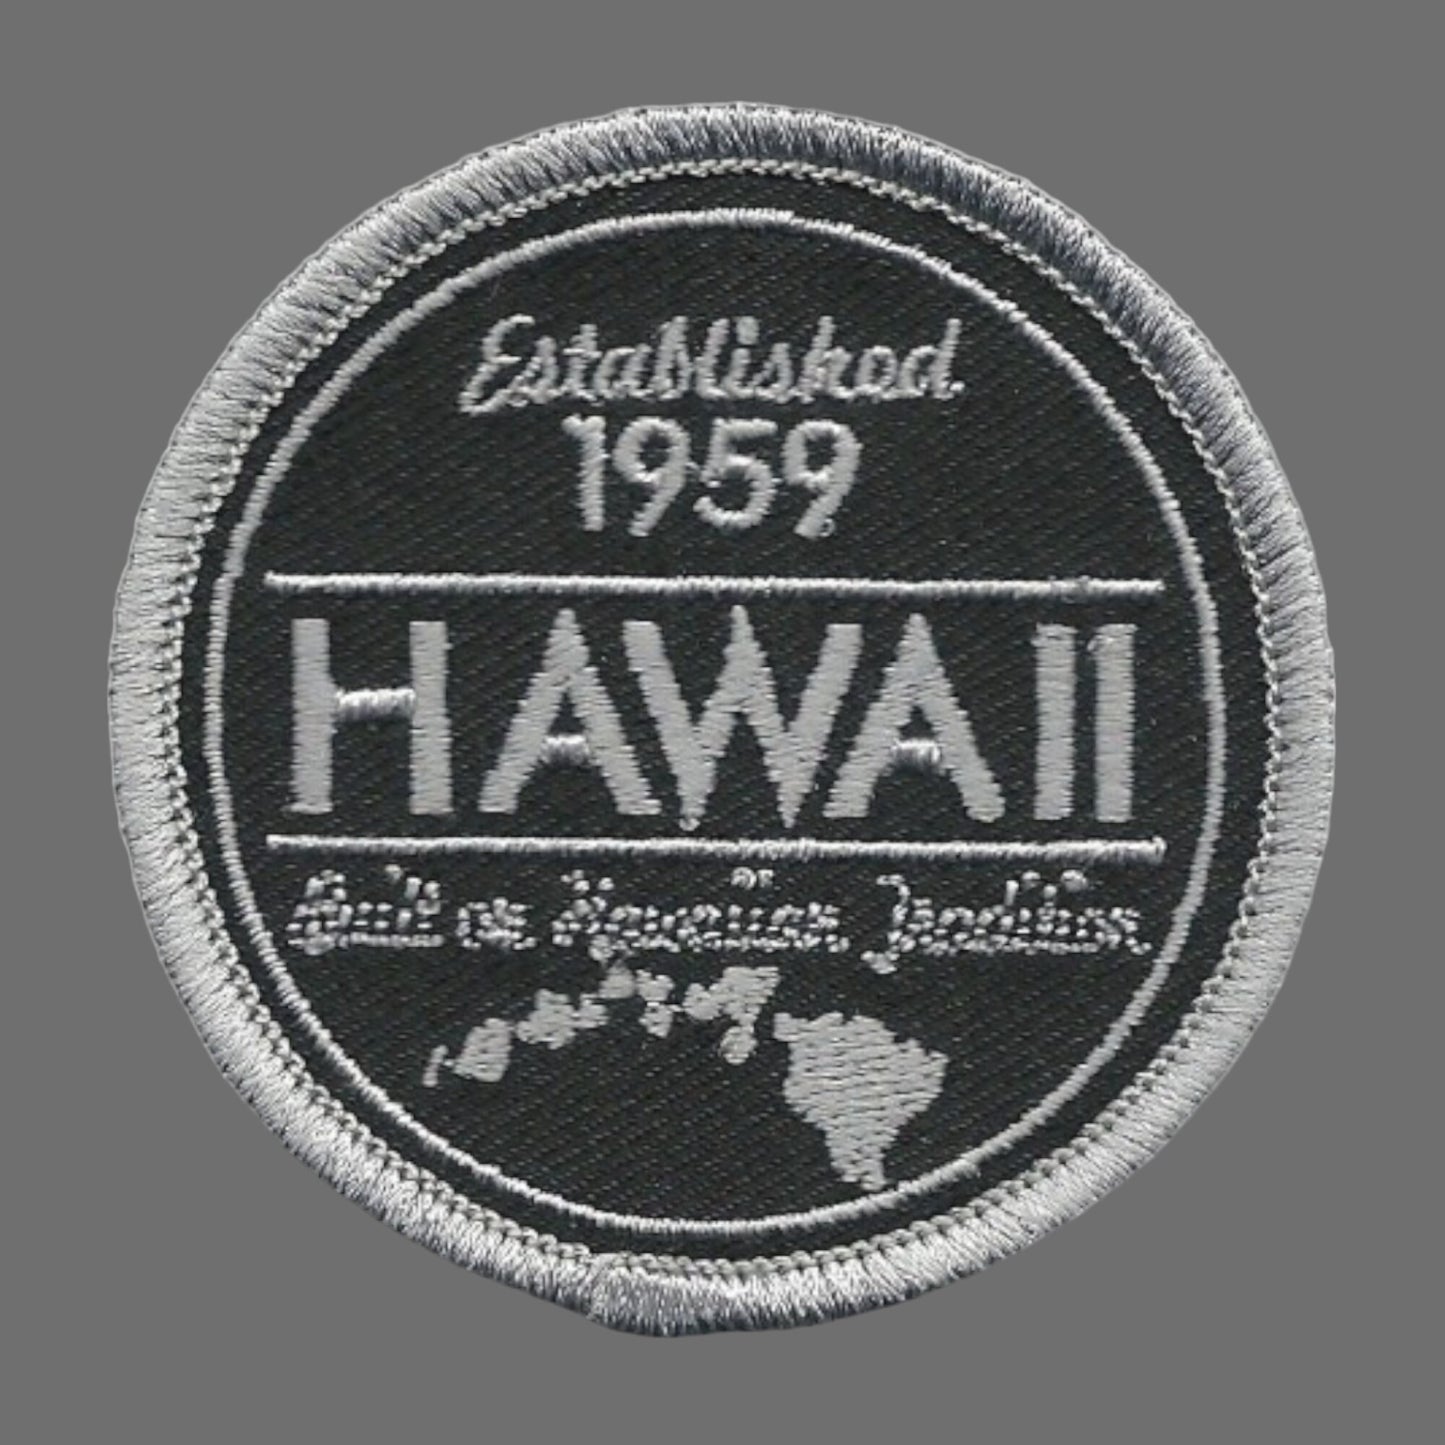 Hawaii Patch – HI Souvenir Travel Patch – Iron On – Applique 2.25"" Island Embellishment Souvenir Established 1959 Black and Gray